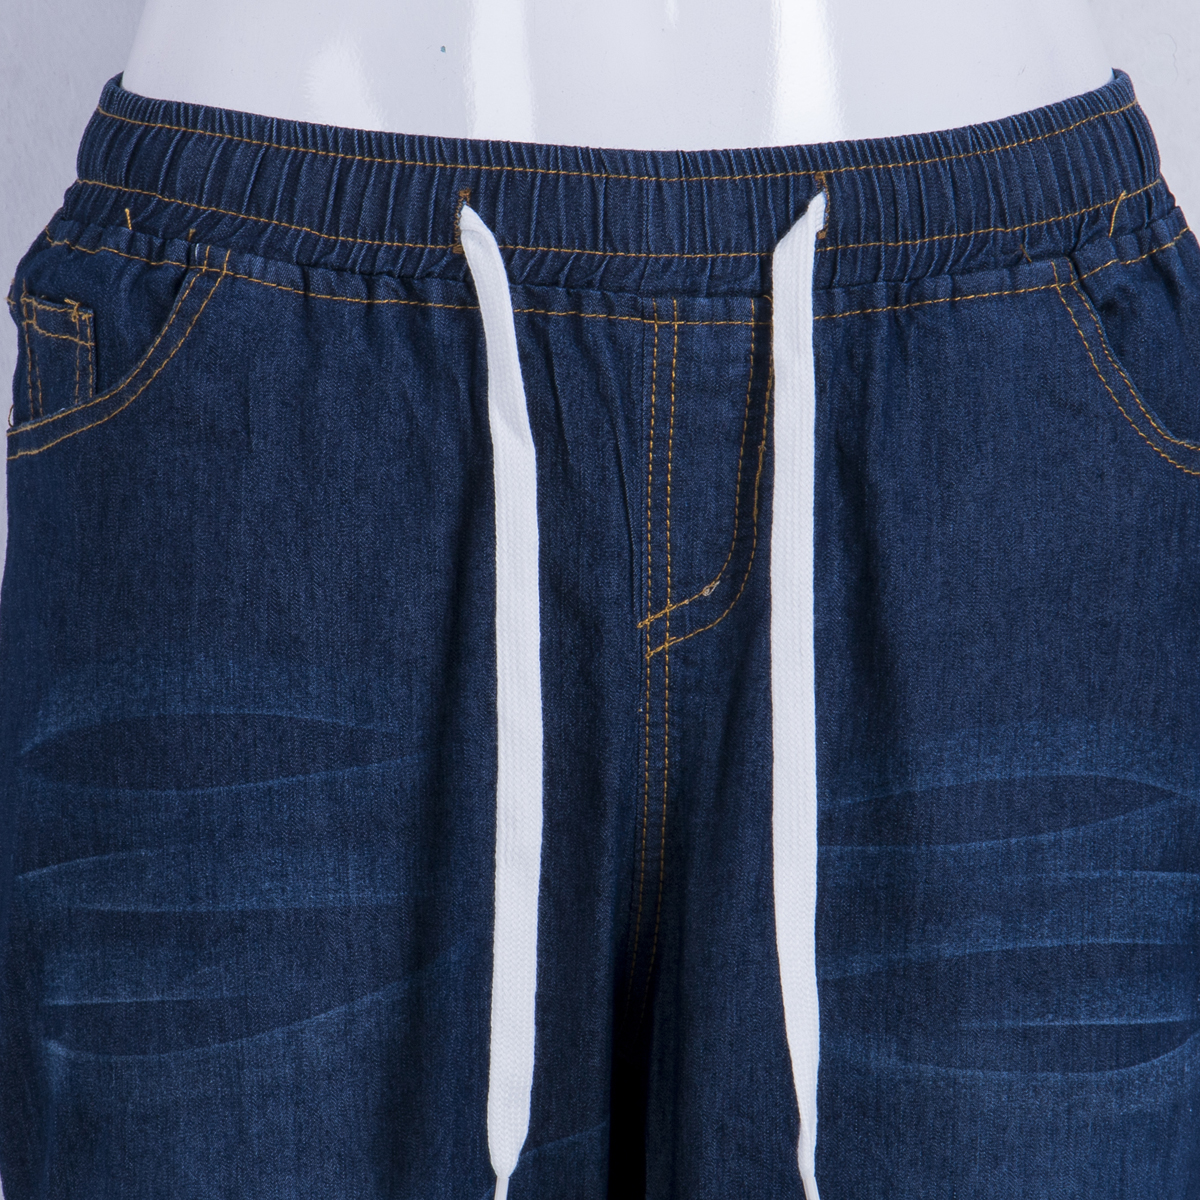 Puloru New Fashion Women Denim Skinny Cut Pencil Pants High Waist Stretch Jeans Trousers Slim drawstring bloomers jeans - image 3 of 5